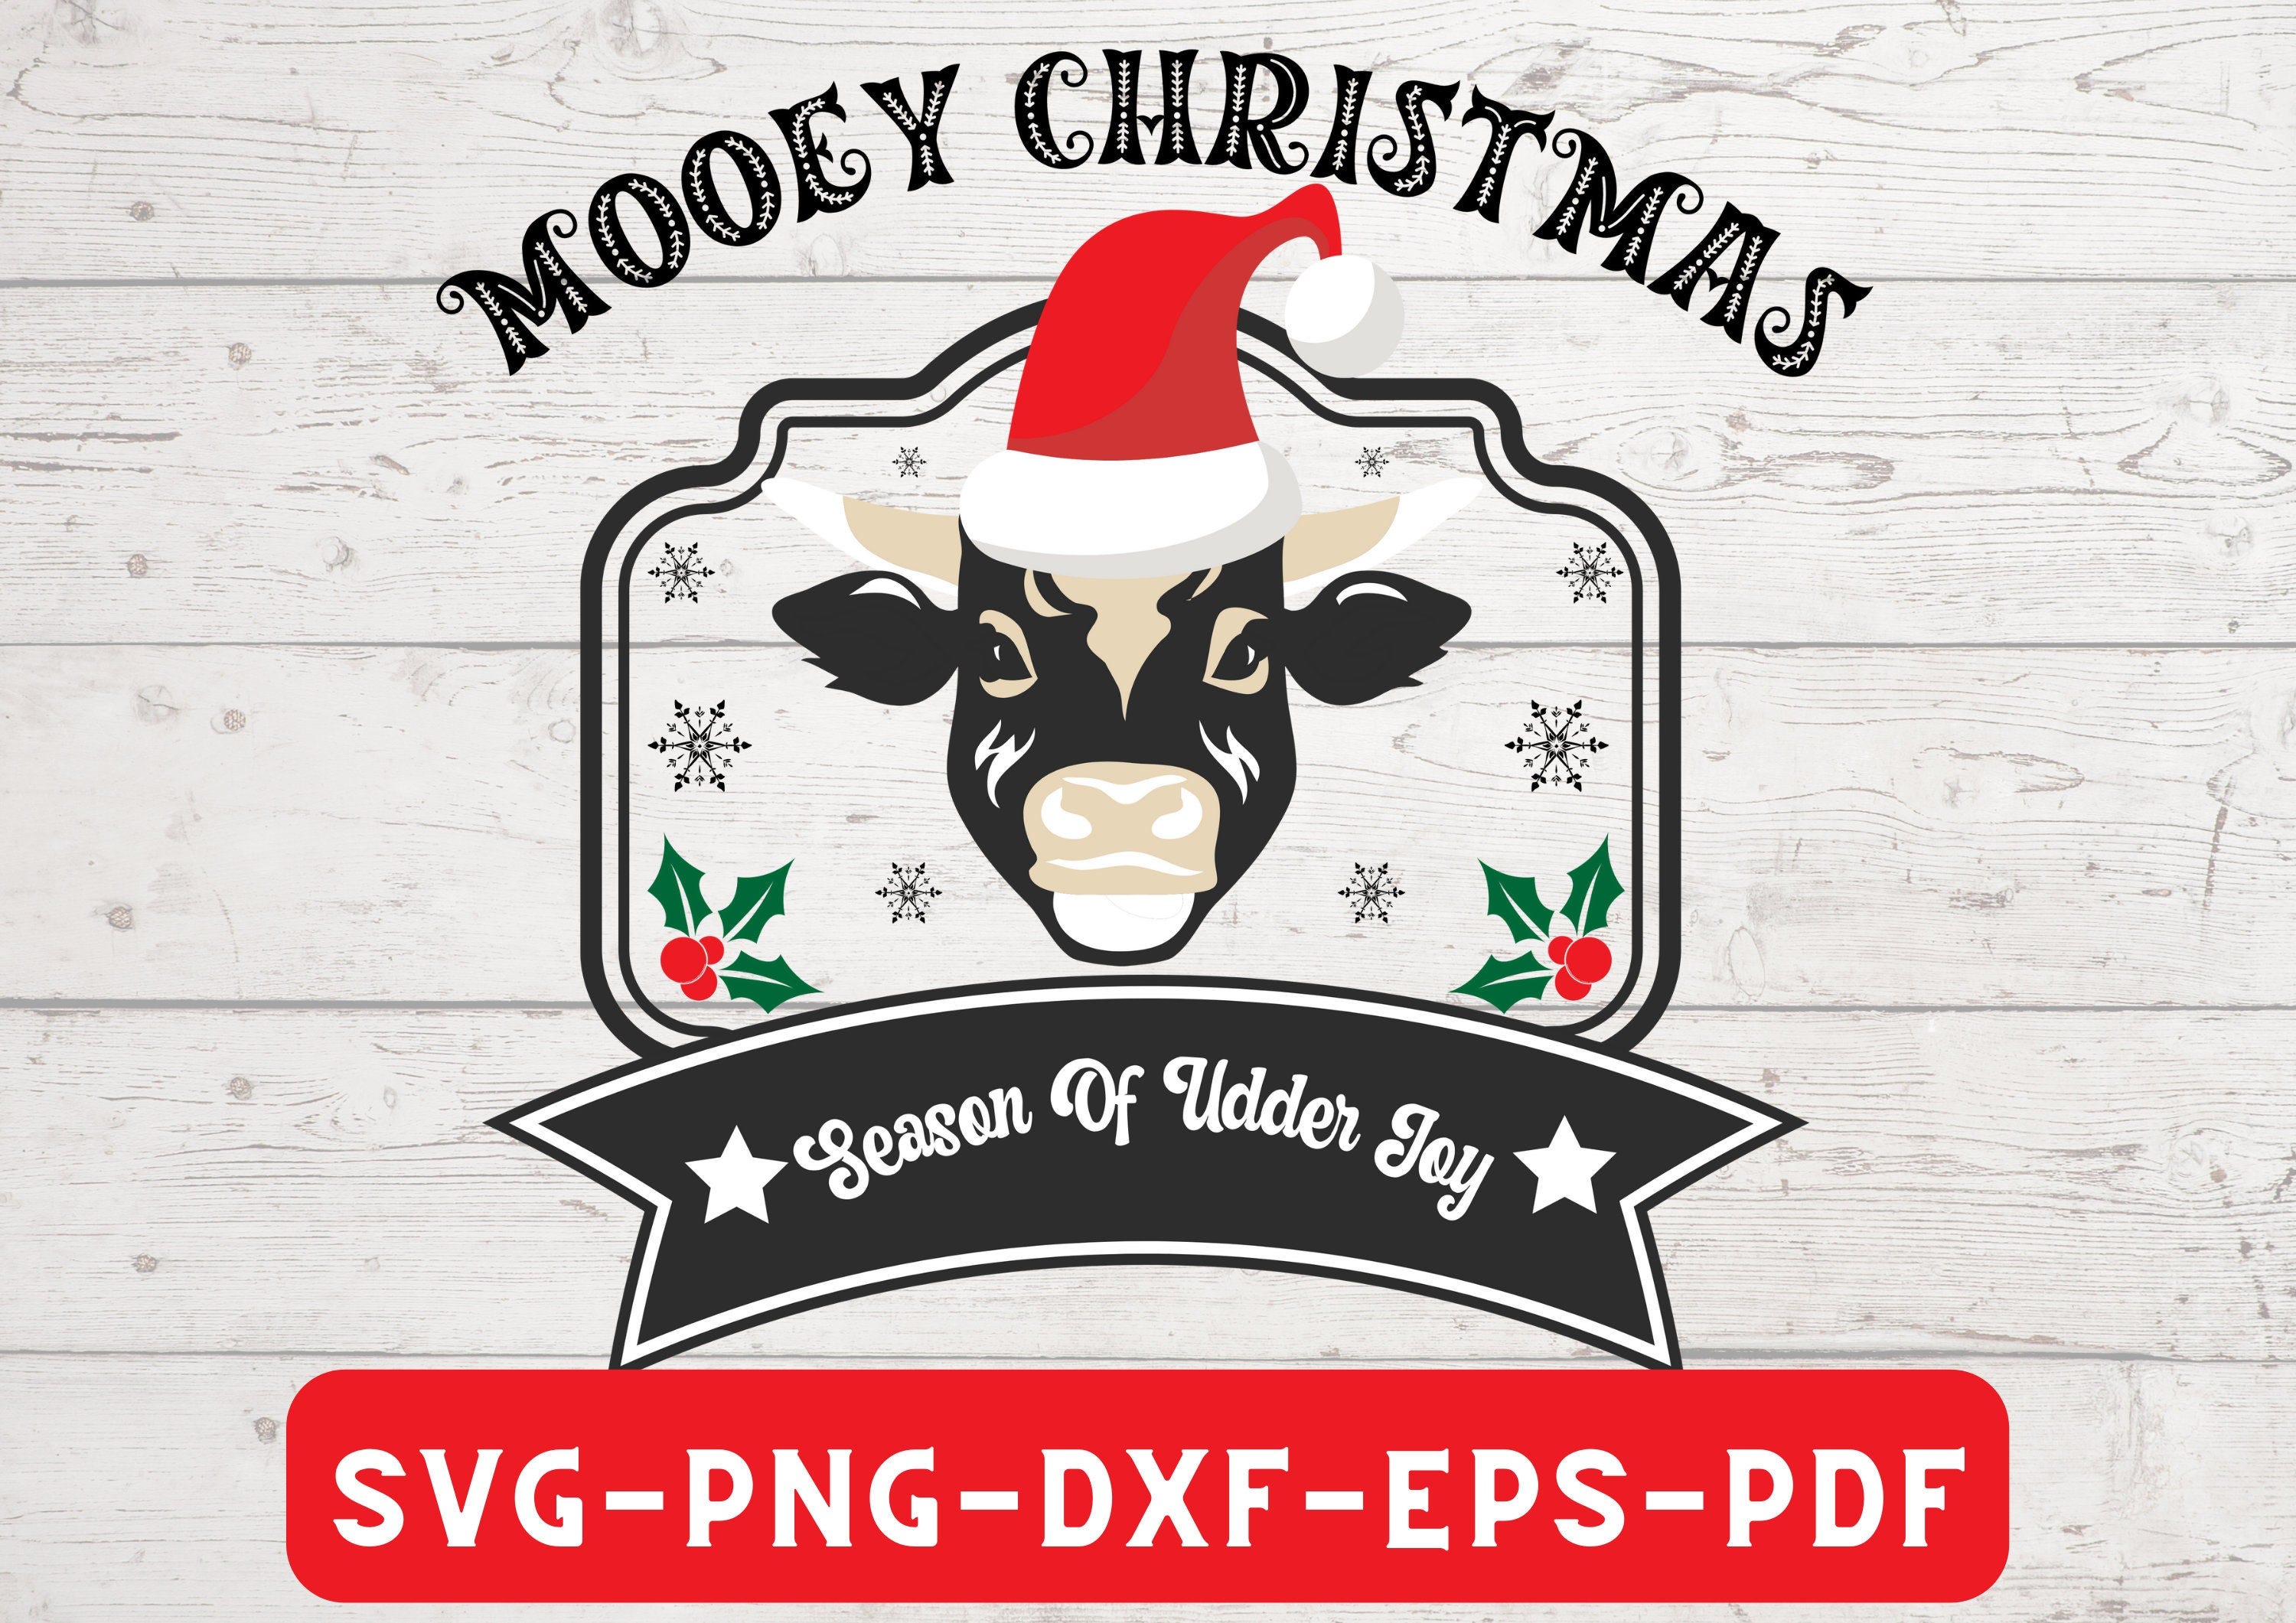 Mooey christmas shirt svg,Cute cow christmas shirt, Season of udder joy svg, Santa hat svg, Snowflakes svg,Farm fresh shirt svg, cricut